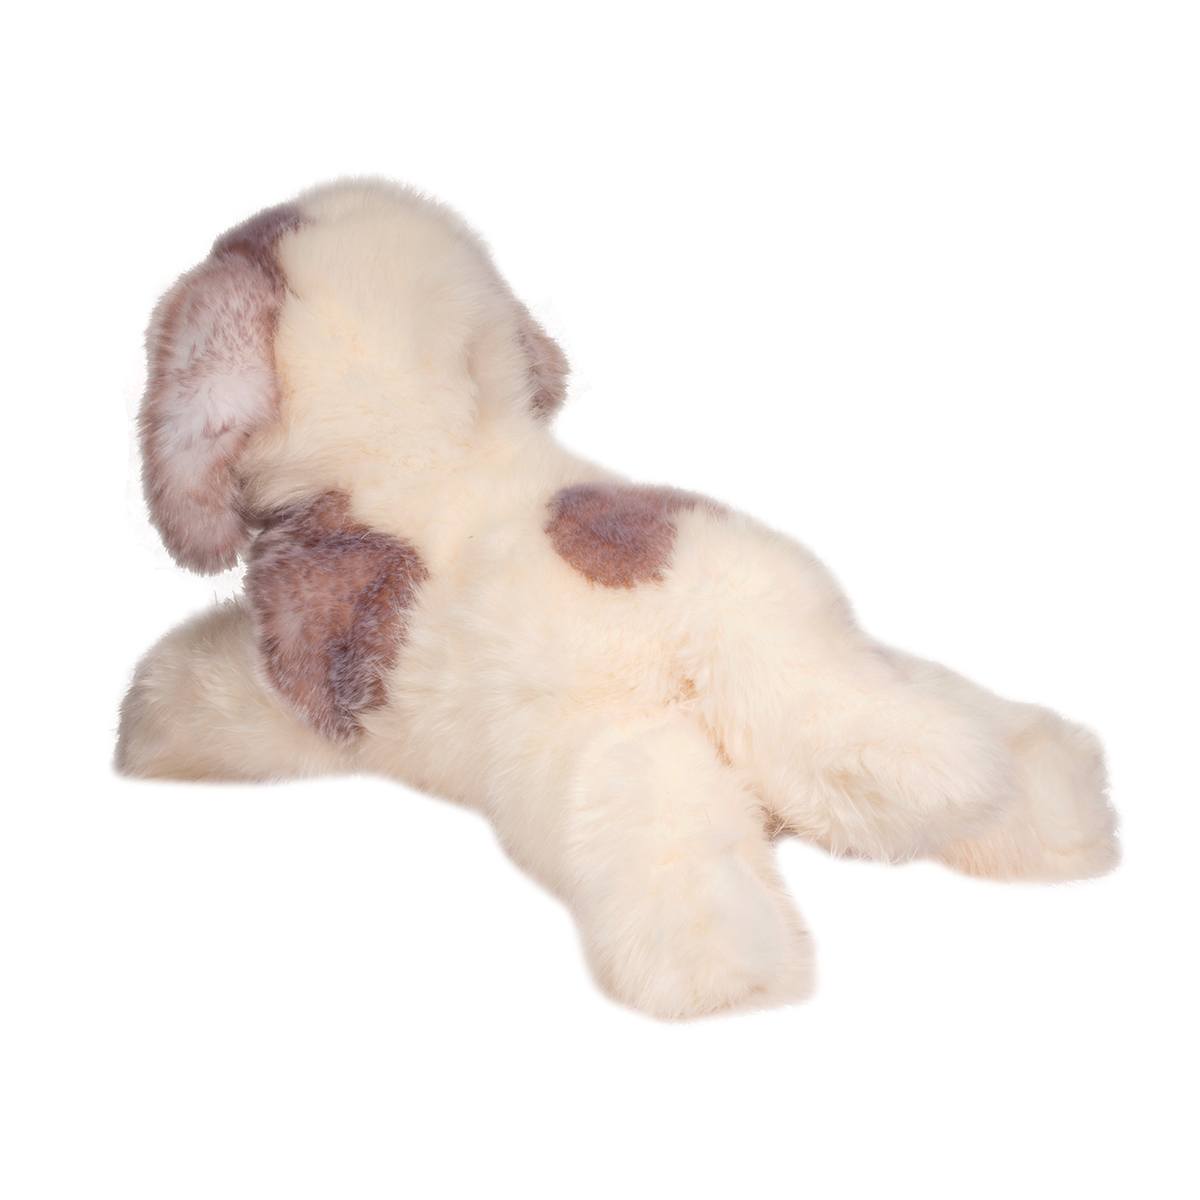 RIVER the Plush GREAT PYRENEES Dog Stuffed Animal Douglas Cuddle Toys #2416 